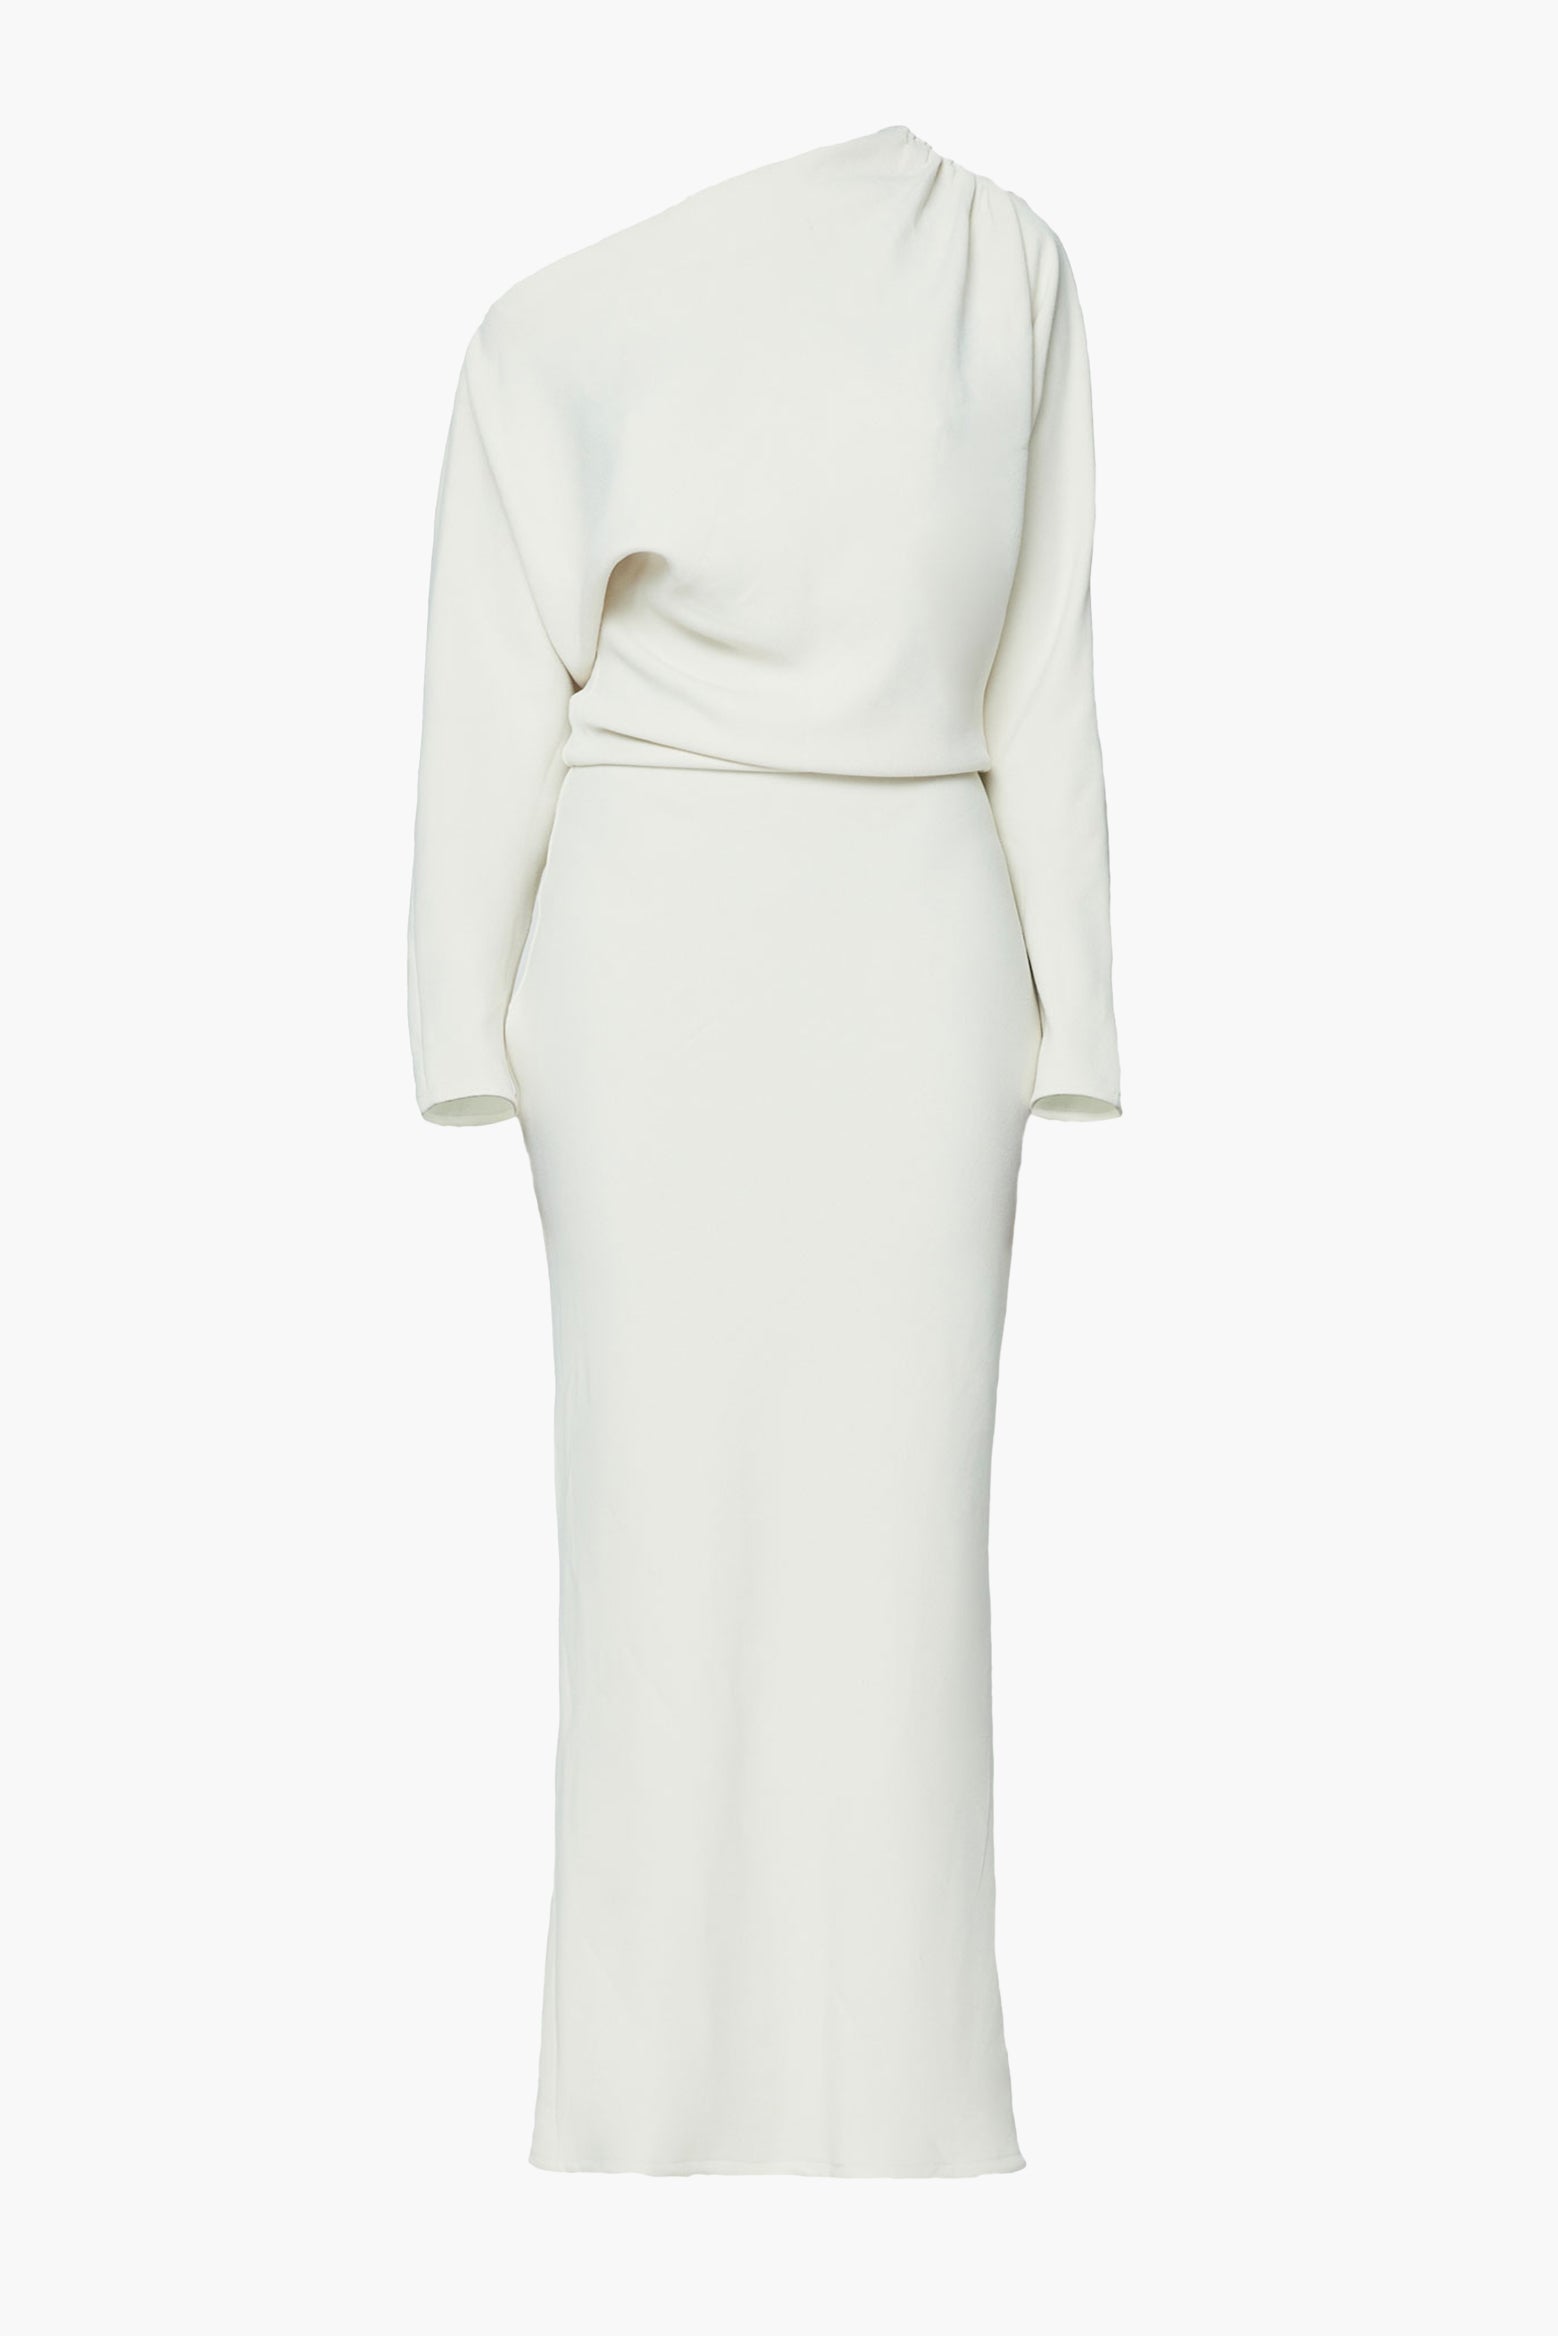 Wynn Hamlyn Holly Maxi Dress in Ivory available at The New Trend Australia.